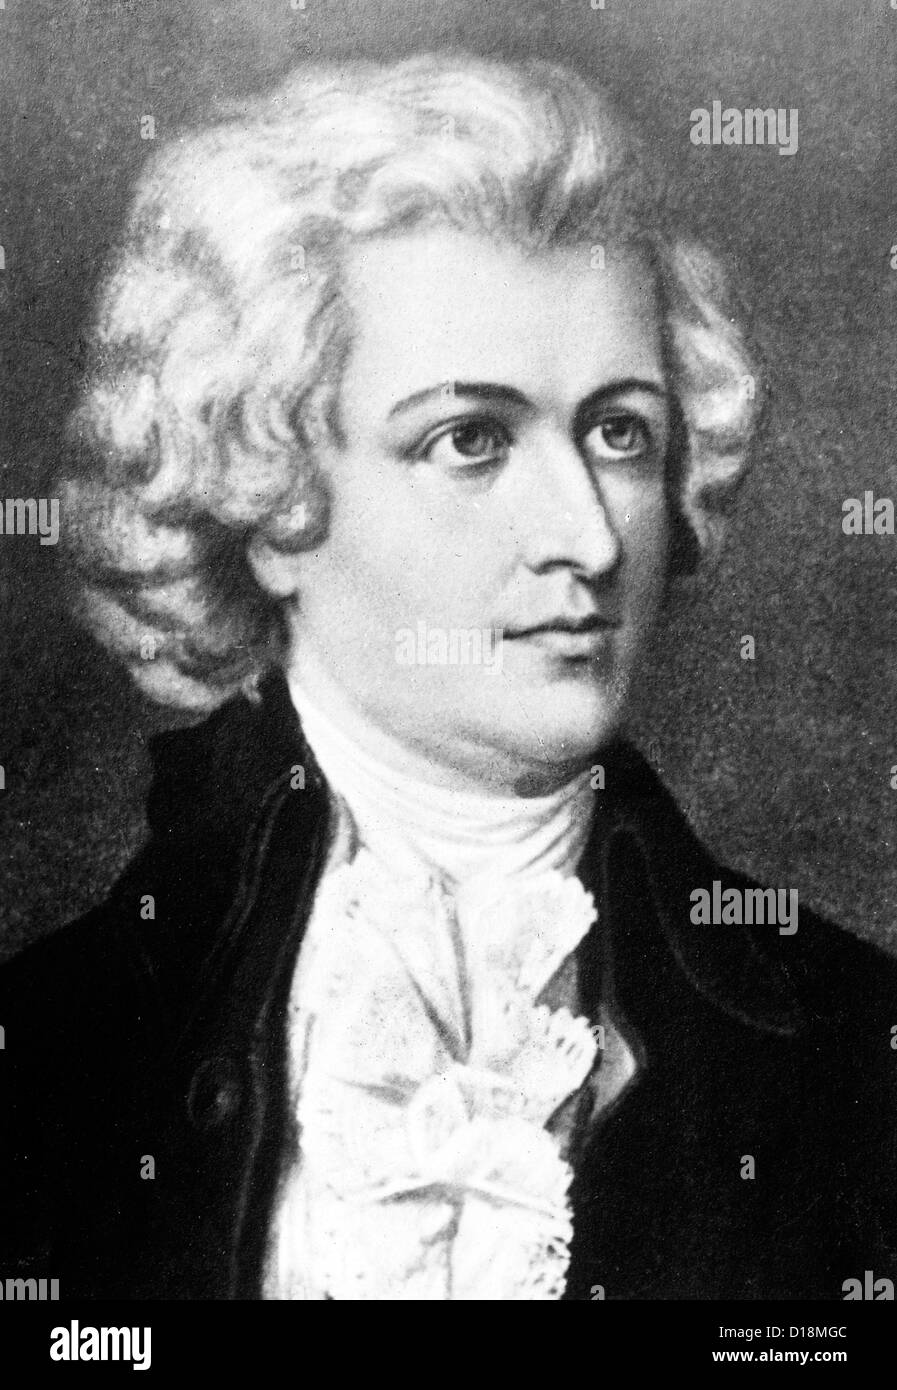 Mozart, Composer Wolfgang Amadeus Mozart Stock Photo